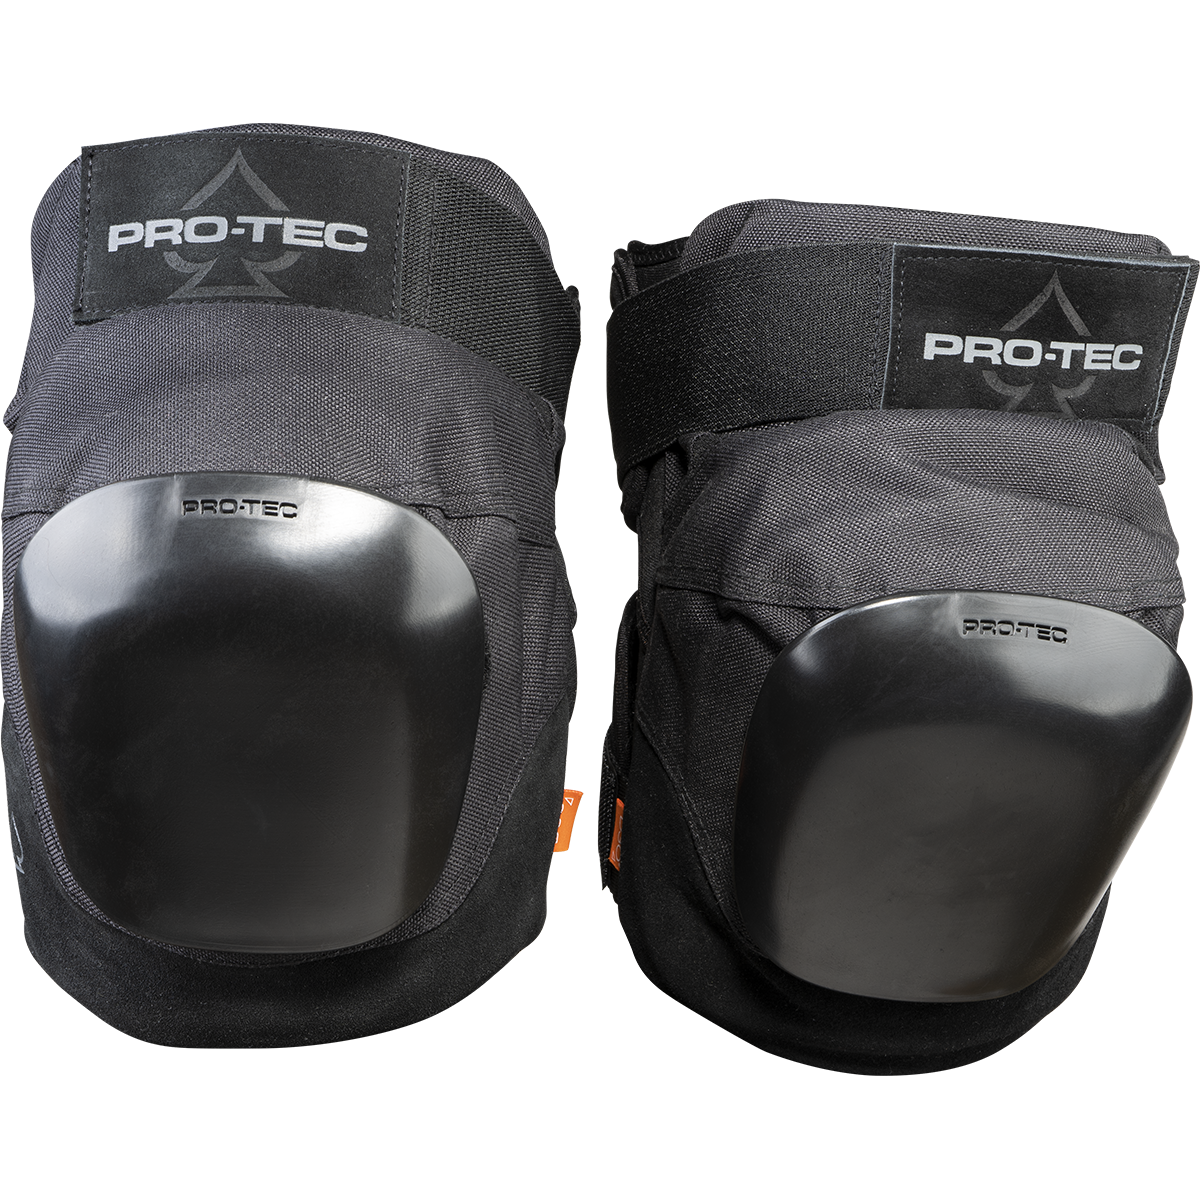 Protec Pro Knee Pads - Black